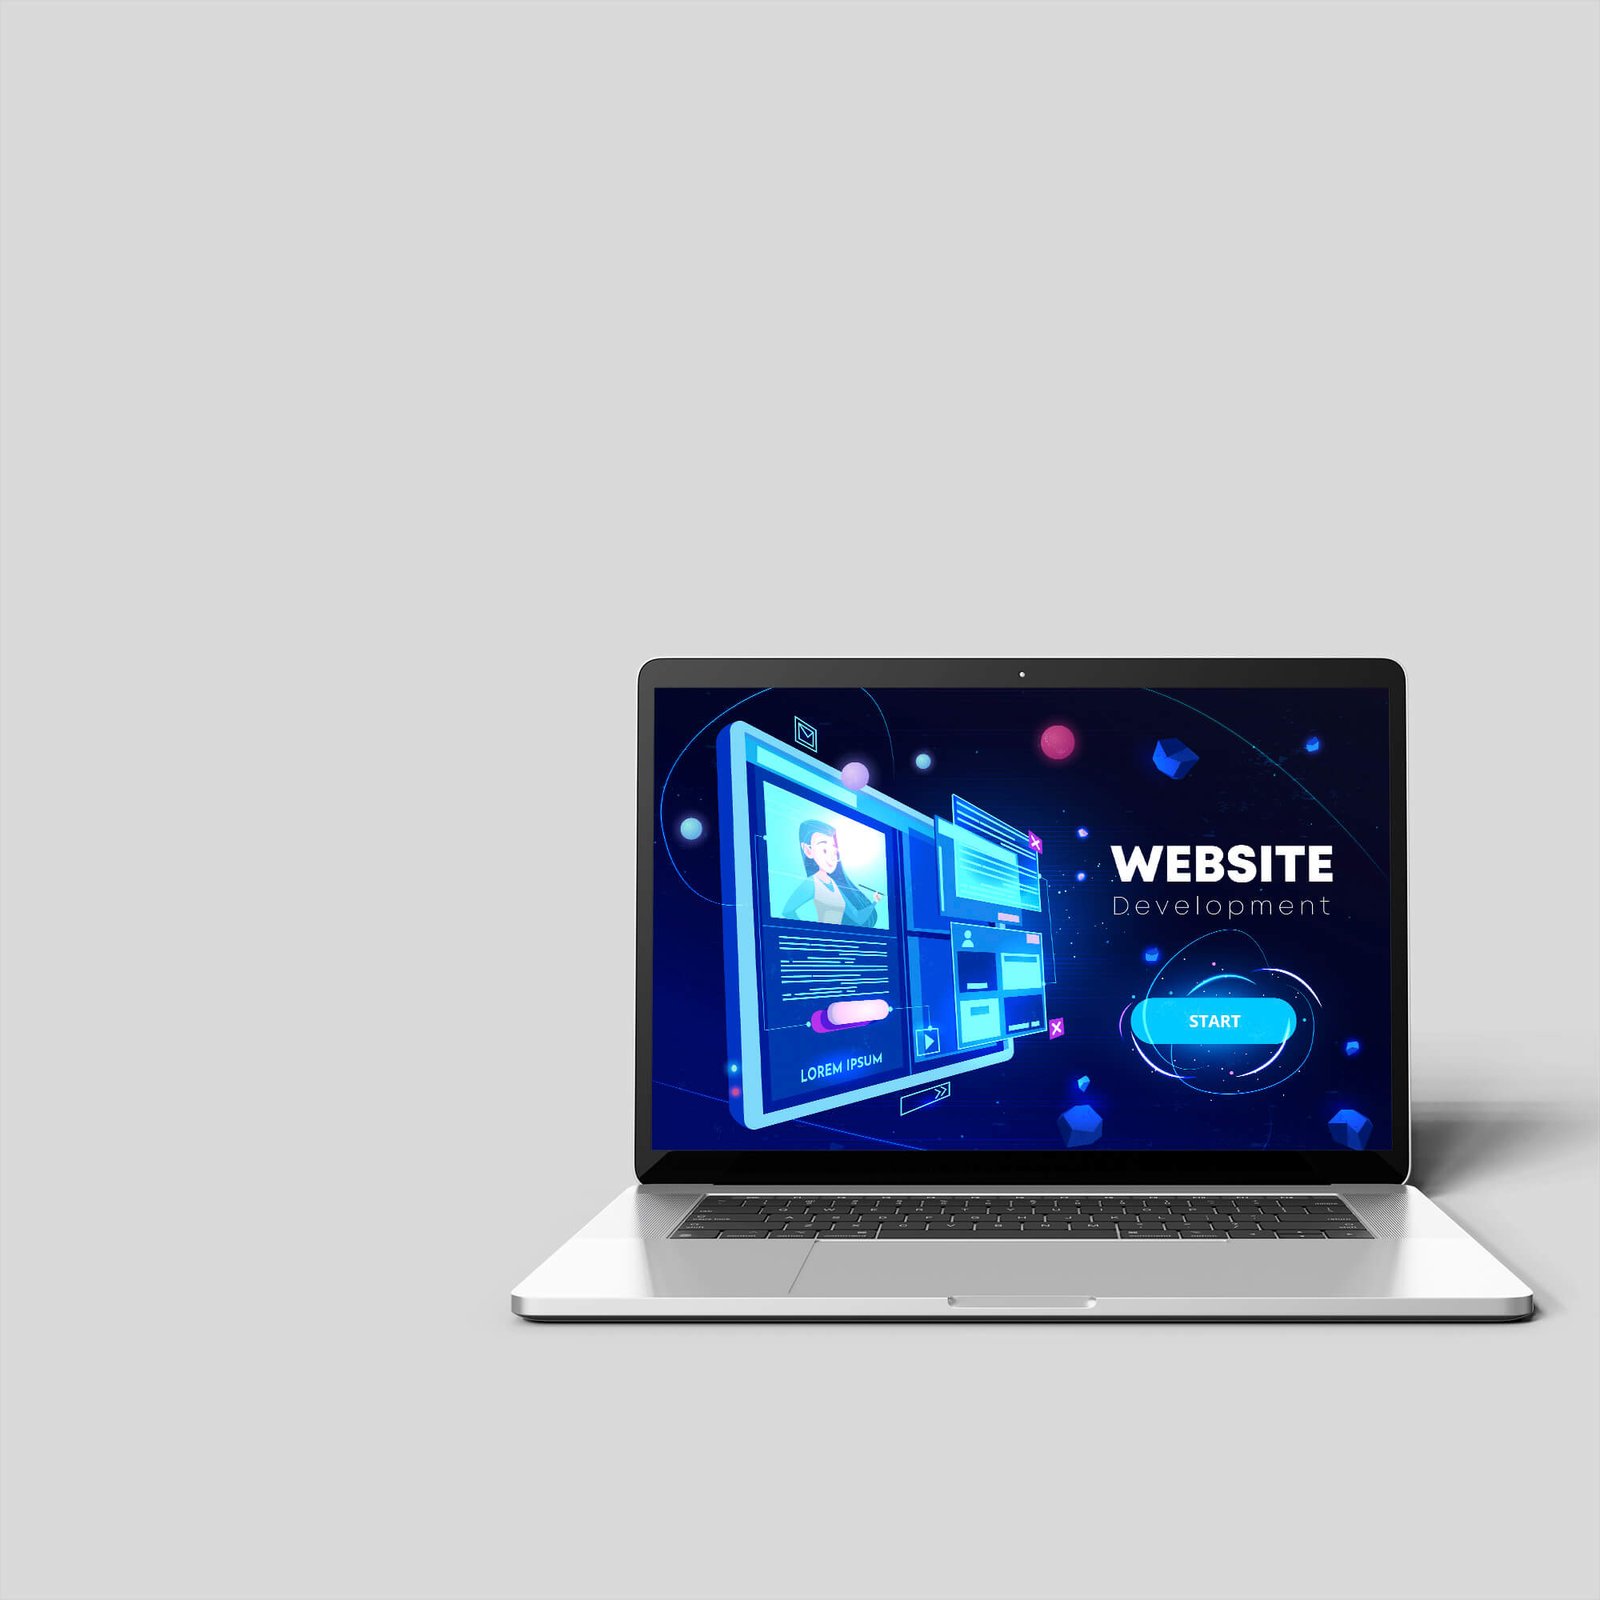 Design Free Web Showcase Mockup PSD Template